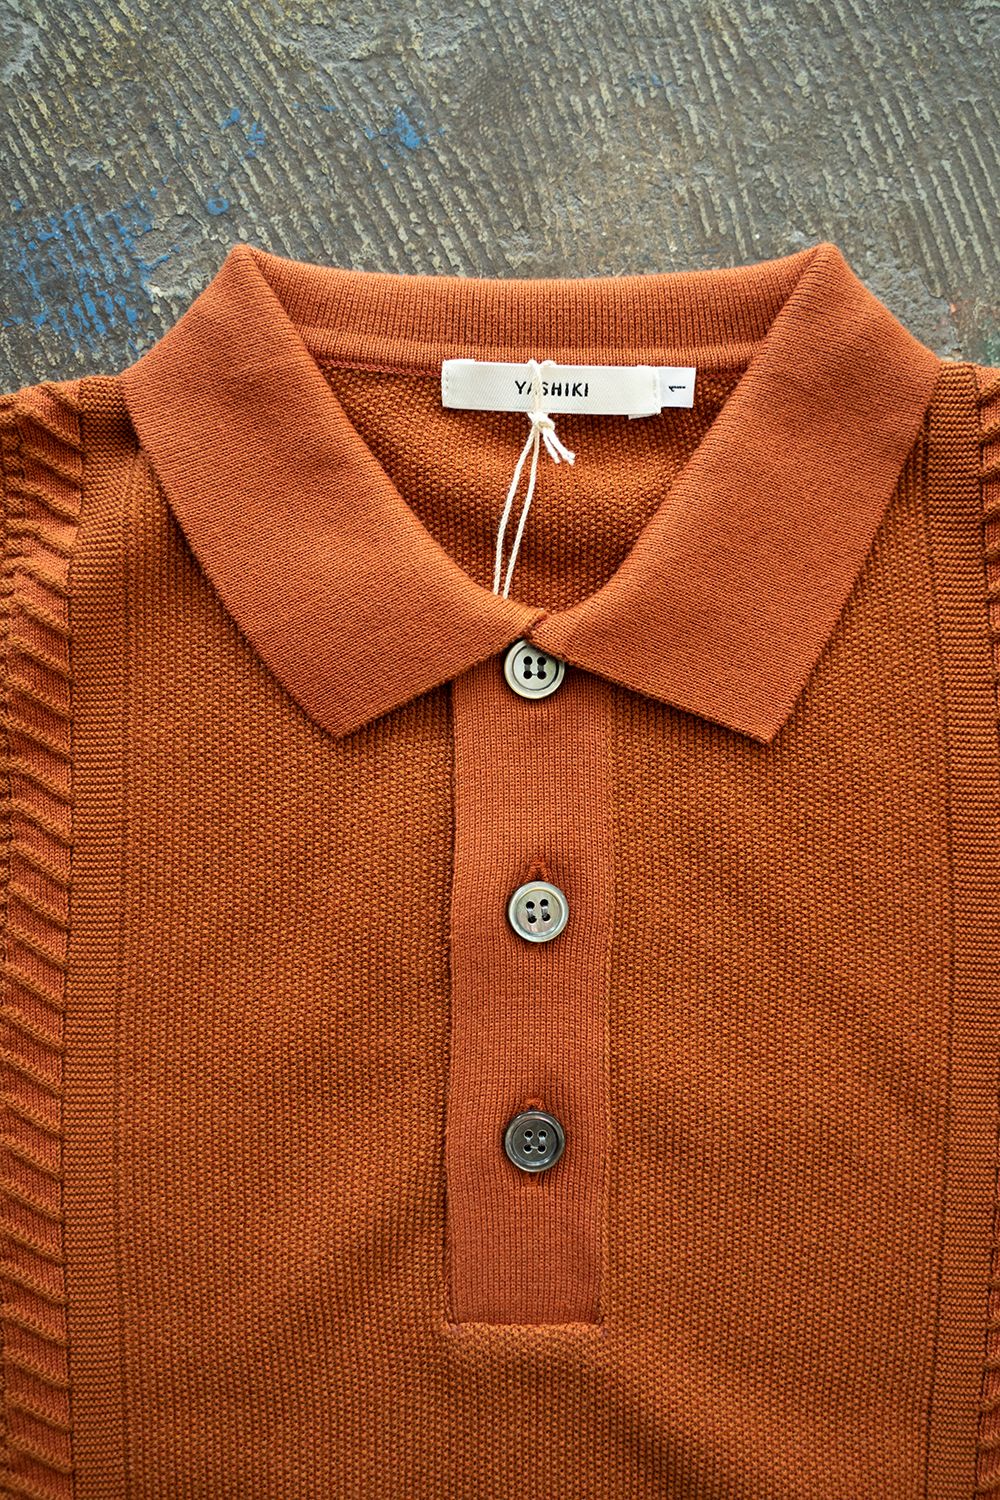 YASHIKI Tsubomi Knit Polo(ORANGE) - ポロシャツ